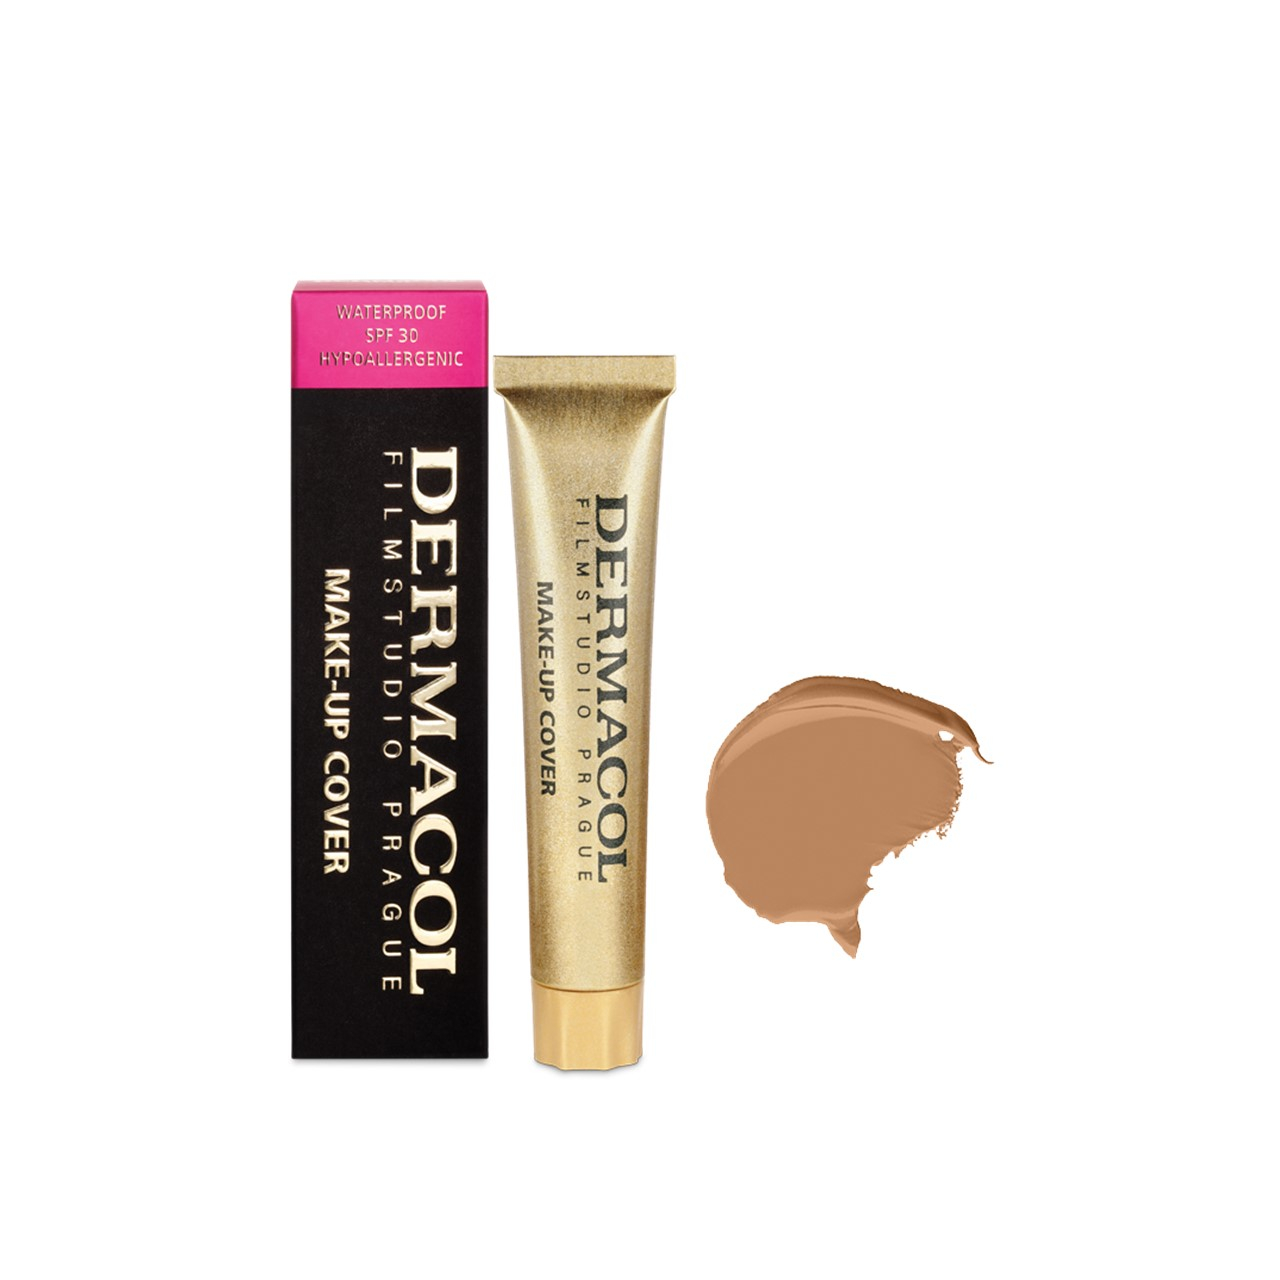 Dermacol Make-Up Cover Foundation SPF30 223 30g